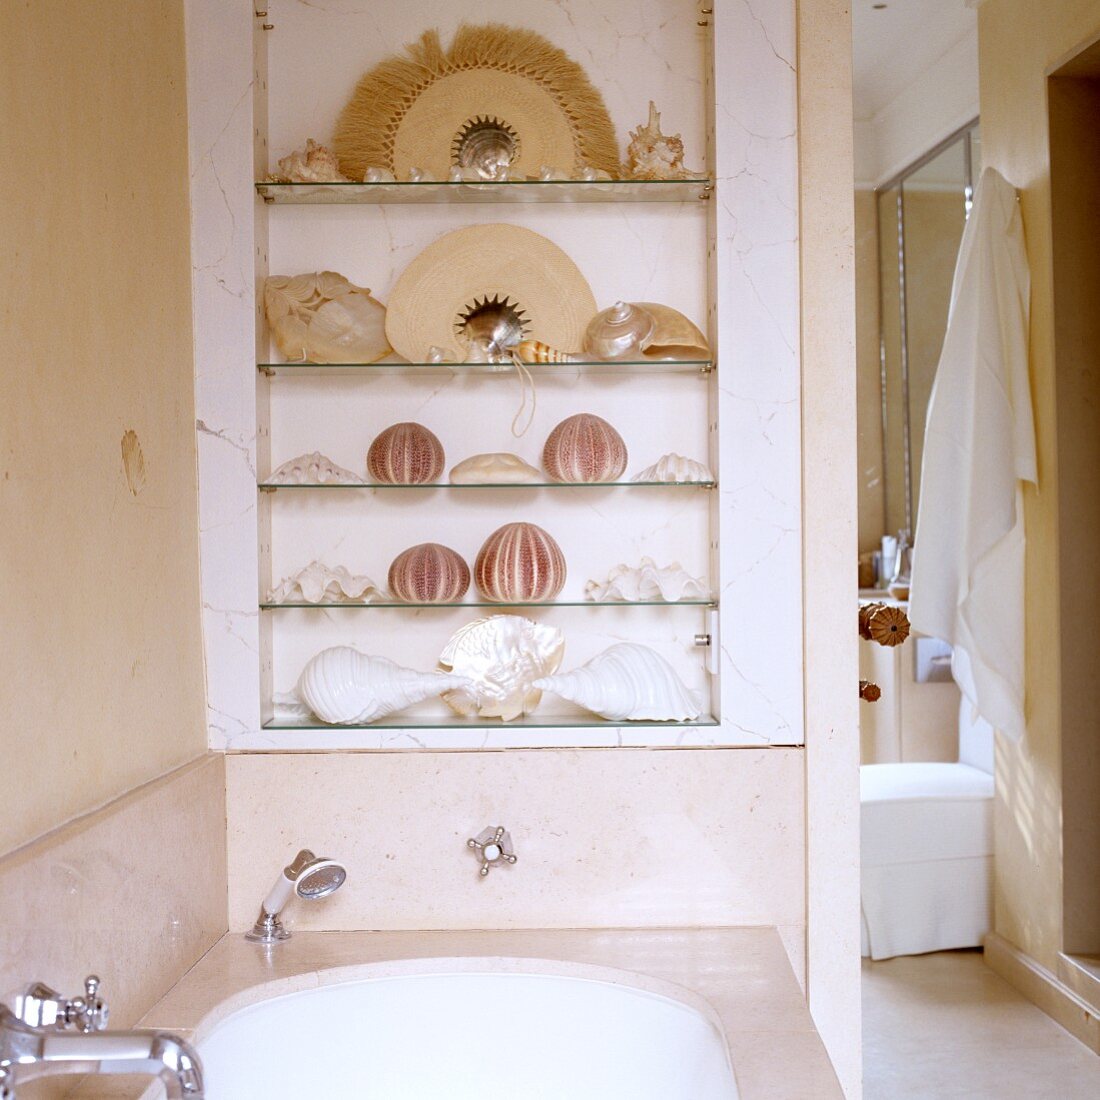 Vintage-style bathtub below seashells on glass shelves in niche